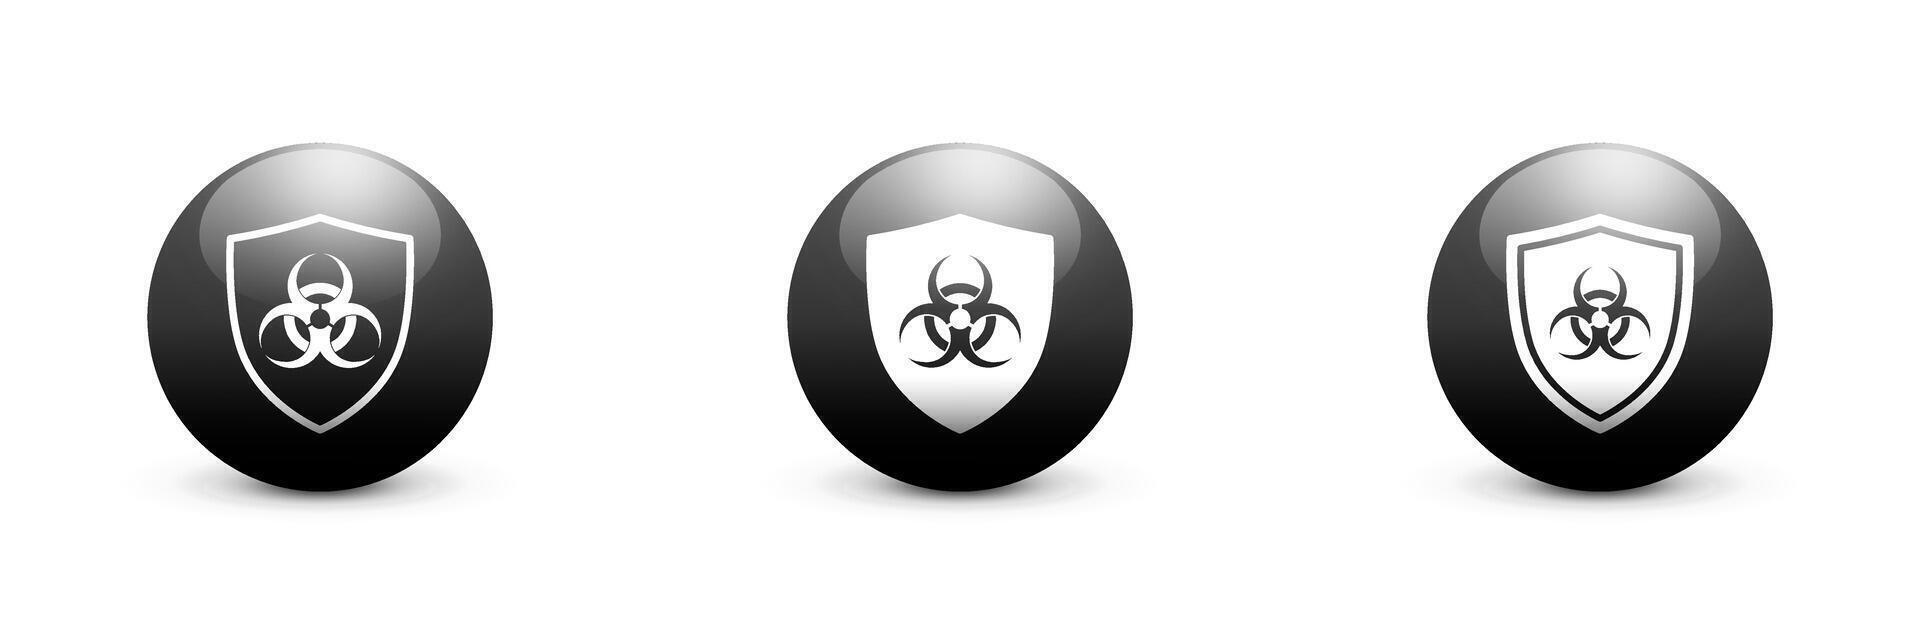 Shield icon with a biohazard sign. Biohazard protection symbol. Vector illustration.